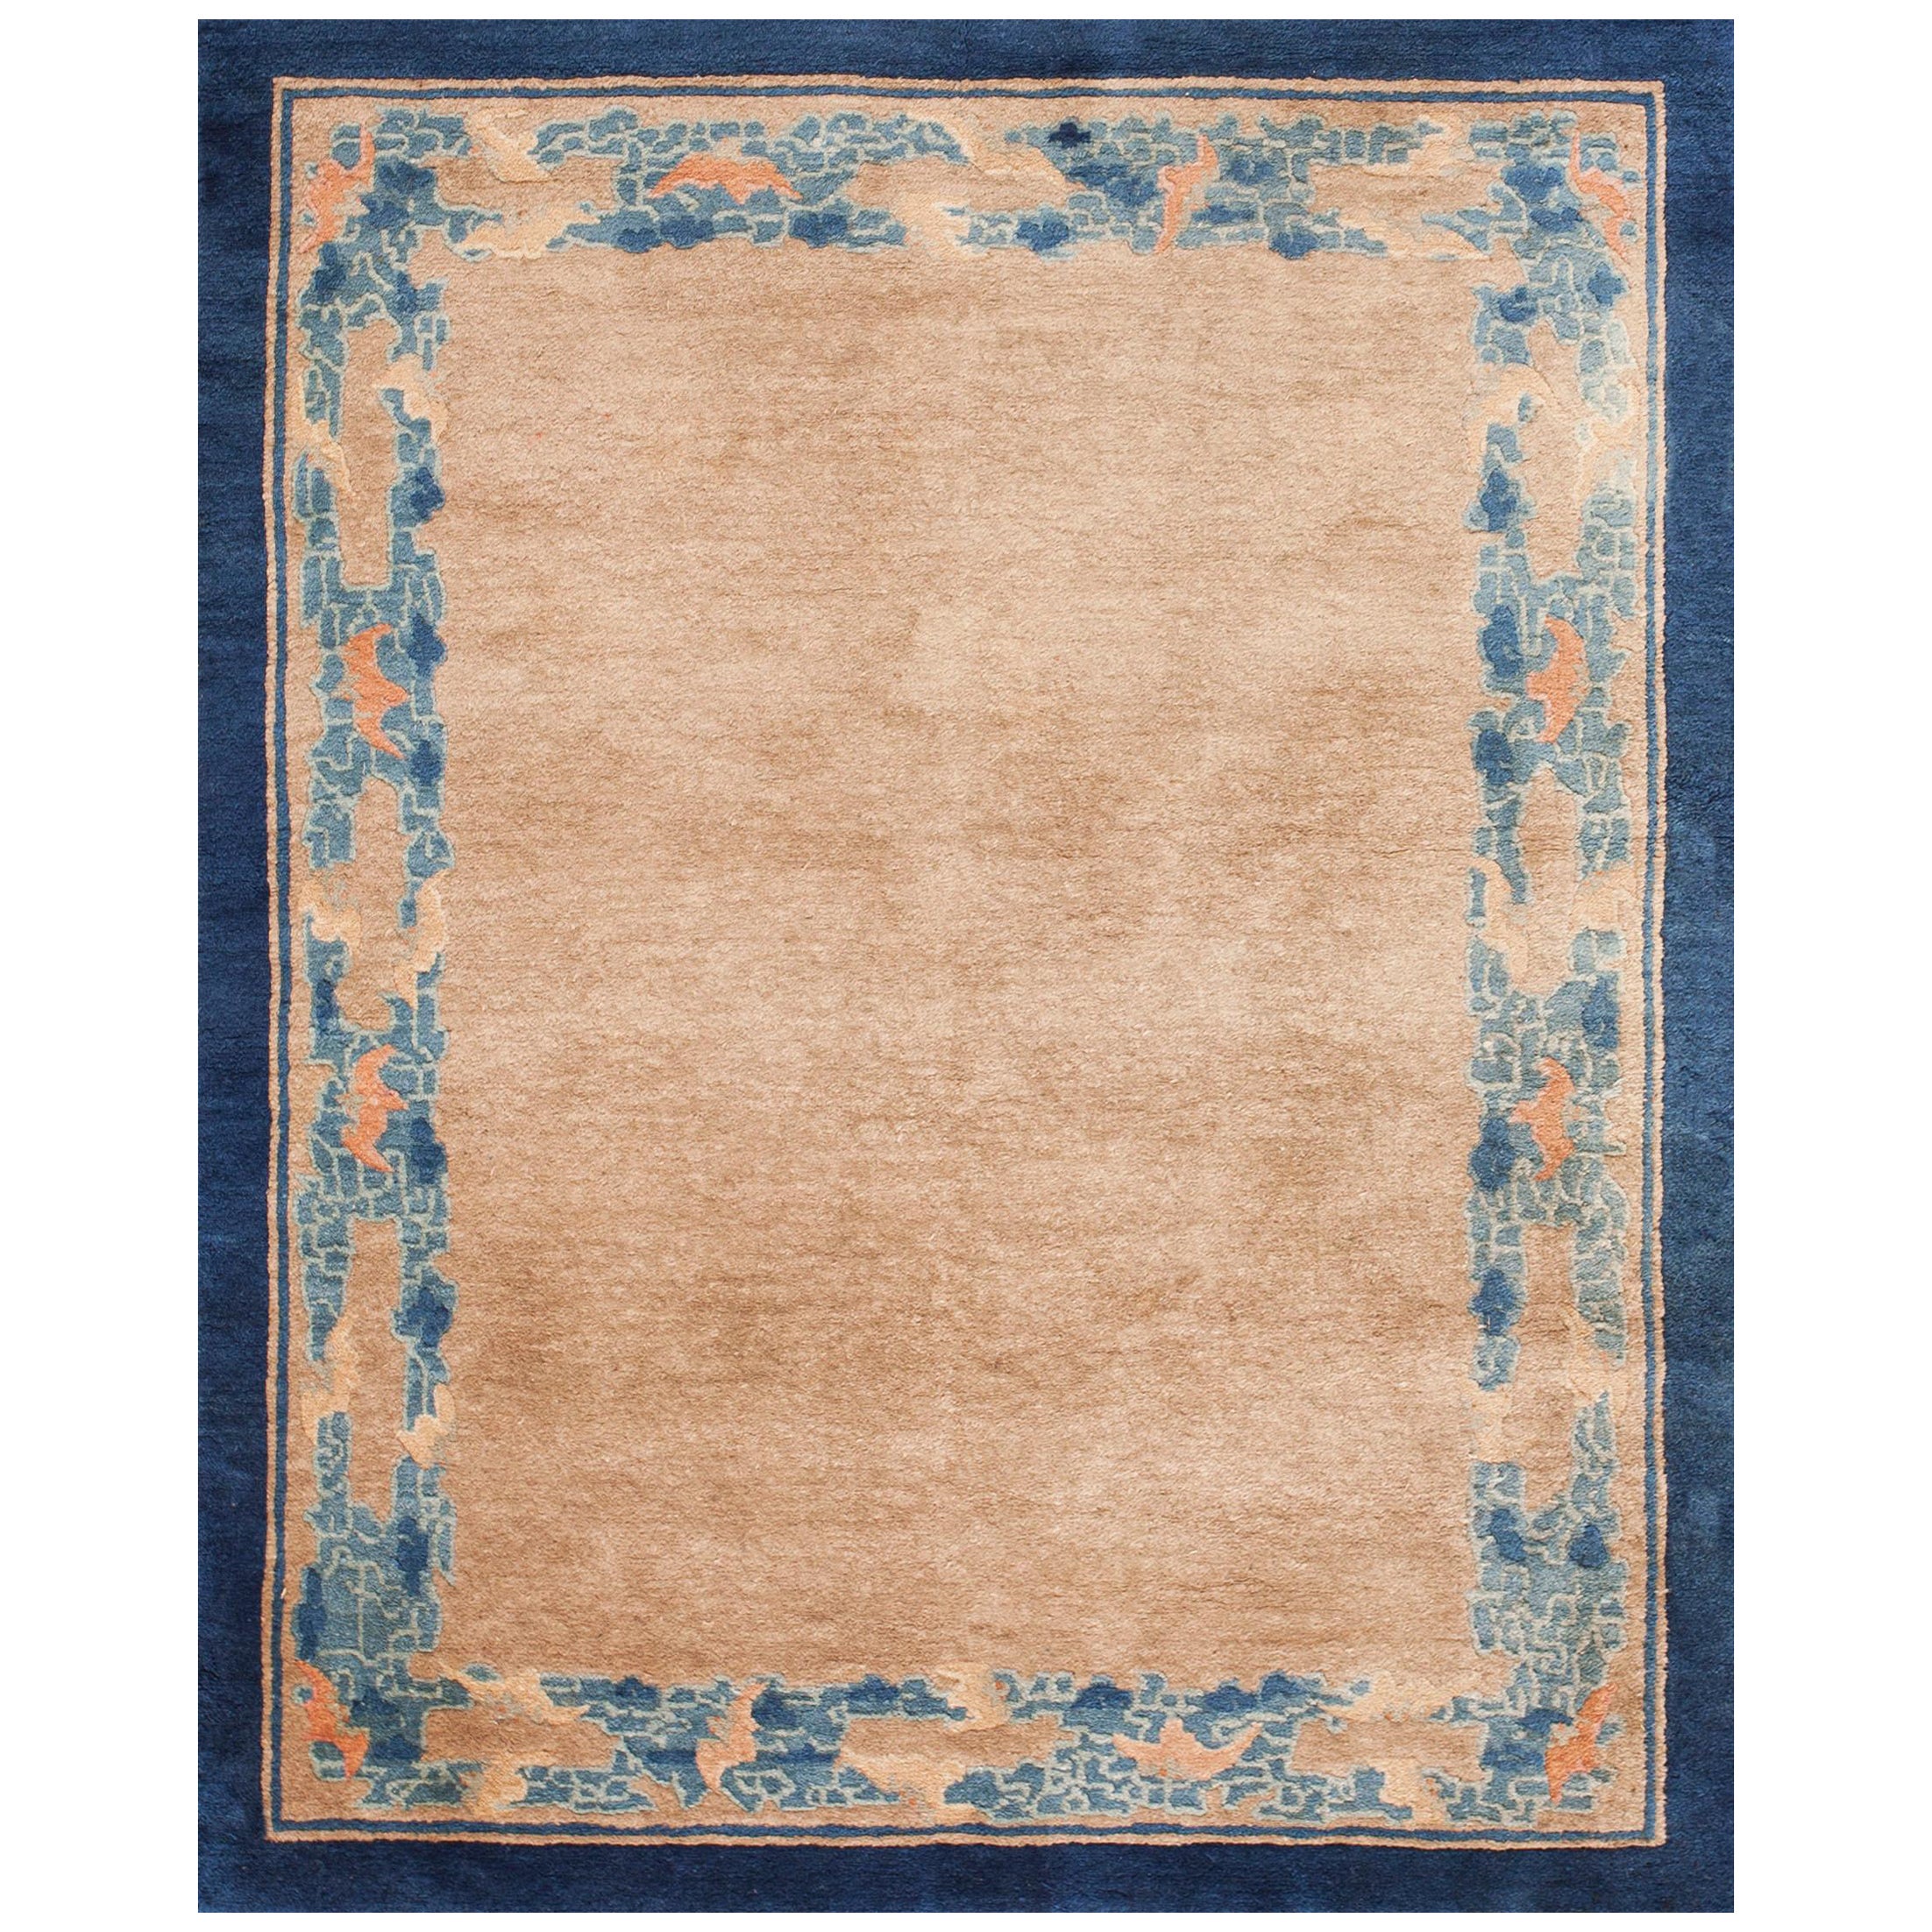 Early 20th Century Chinese Peking Carpet ( 4' x 5' - 122 x 152 )